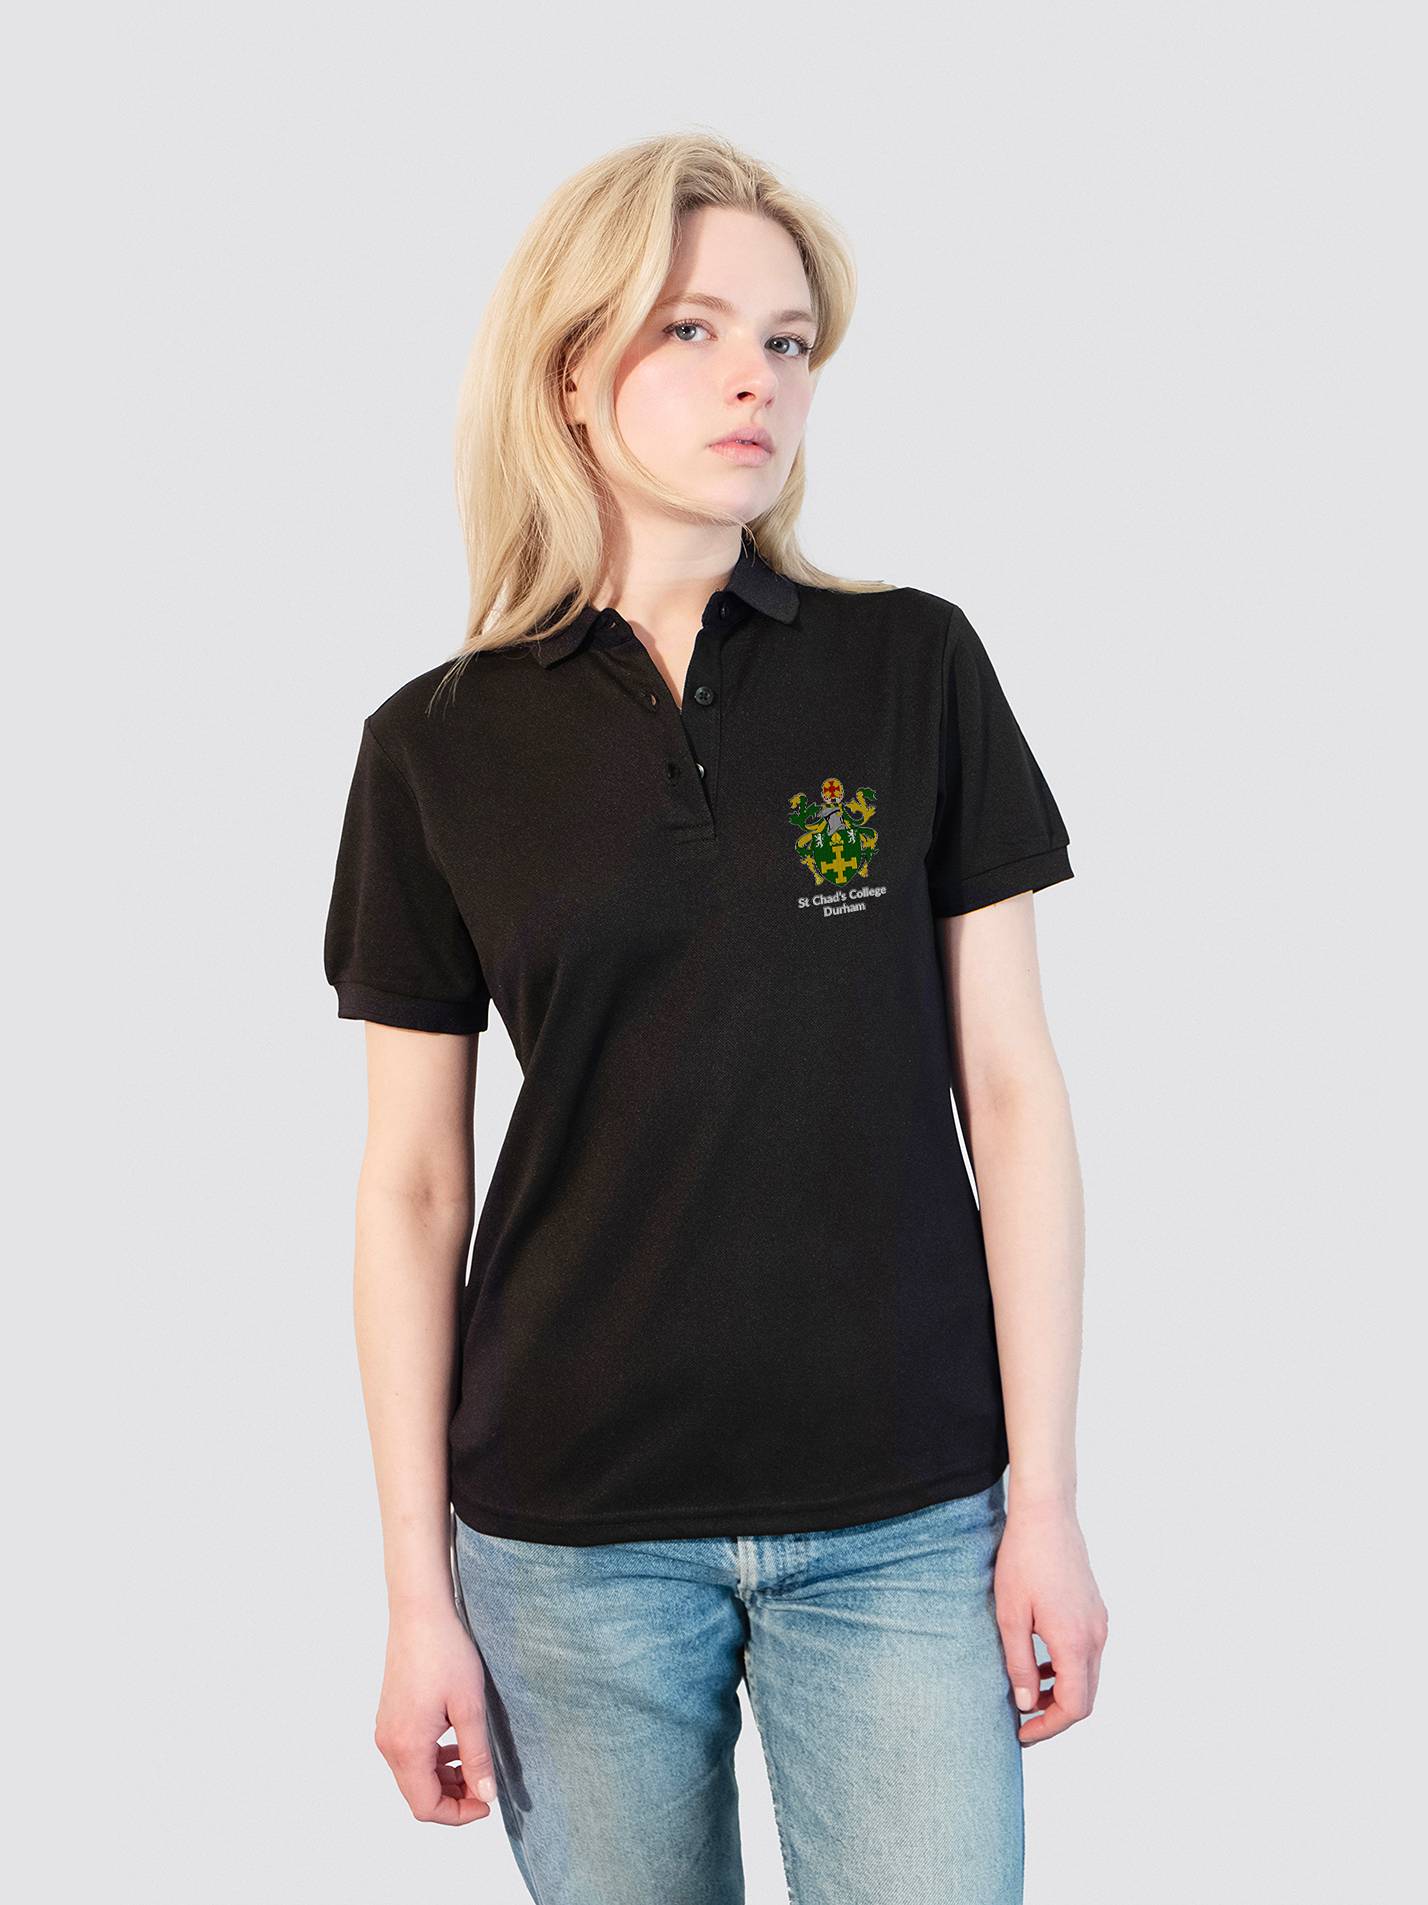 St Chad's College Durham MCR Sustainable Ladies Polo Shirt